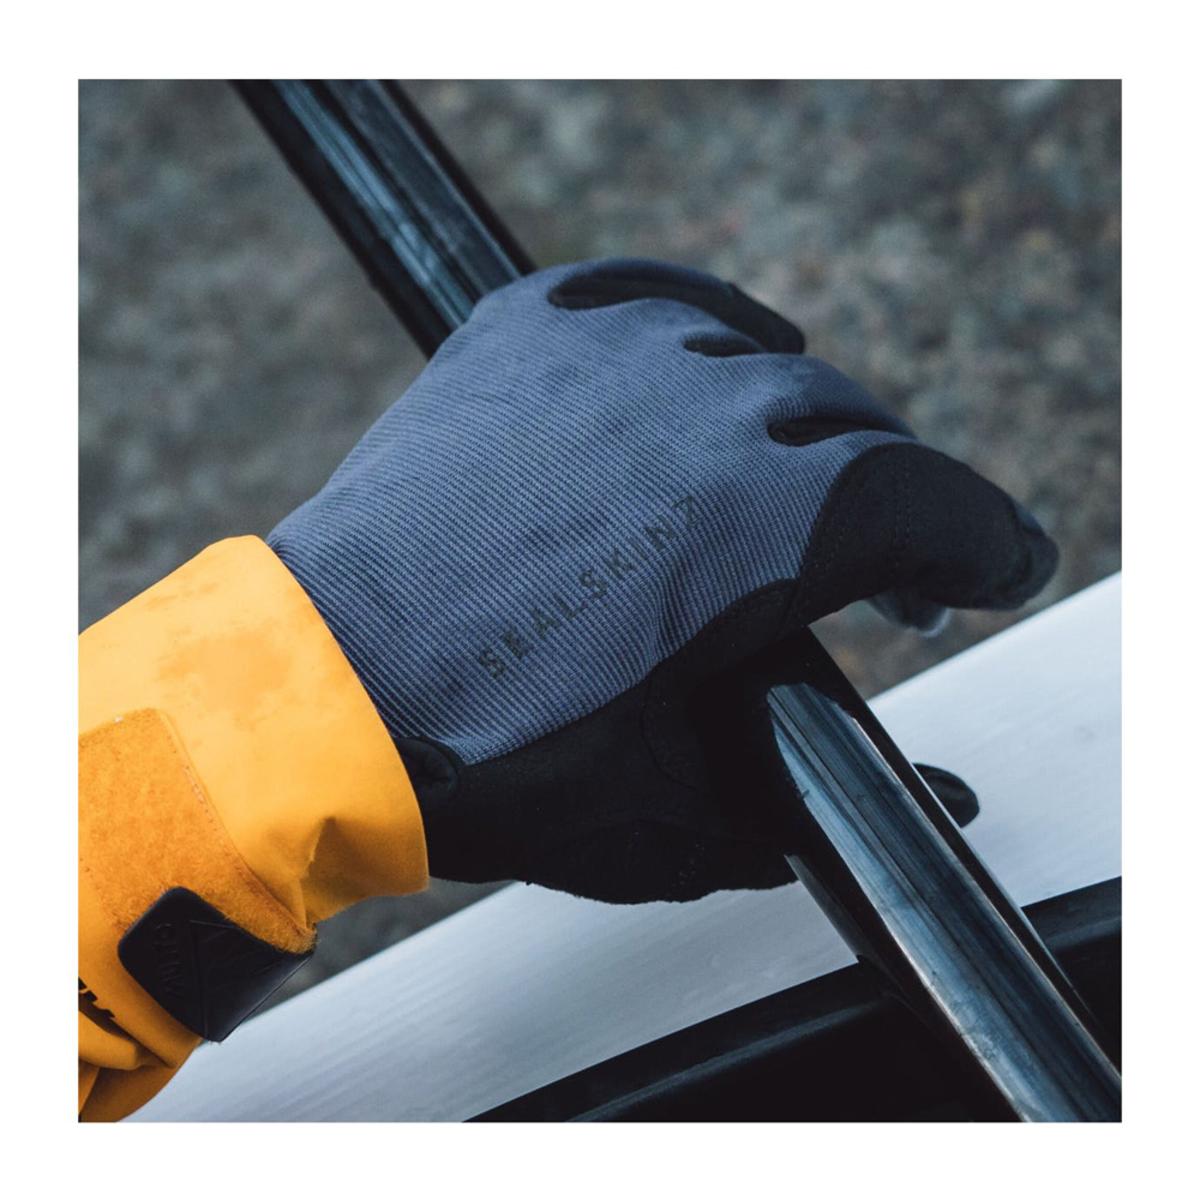 Sealskinz Men's Waterproof All Weather Gloves